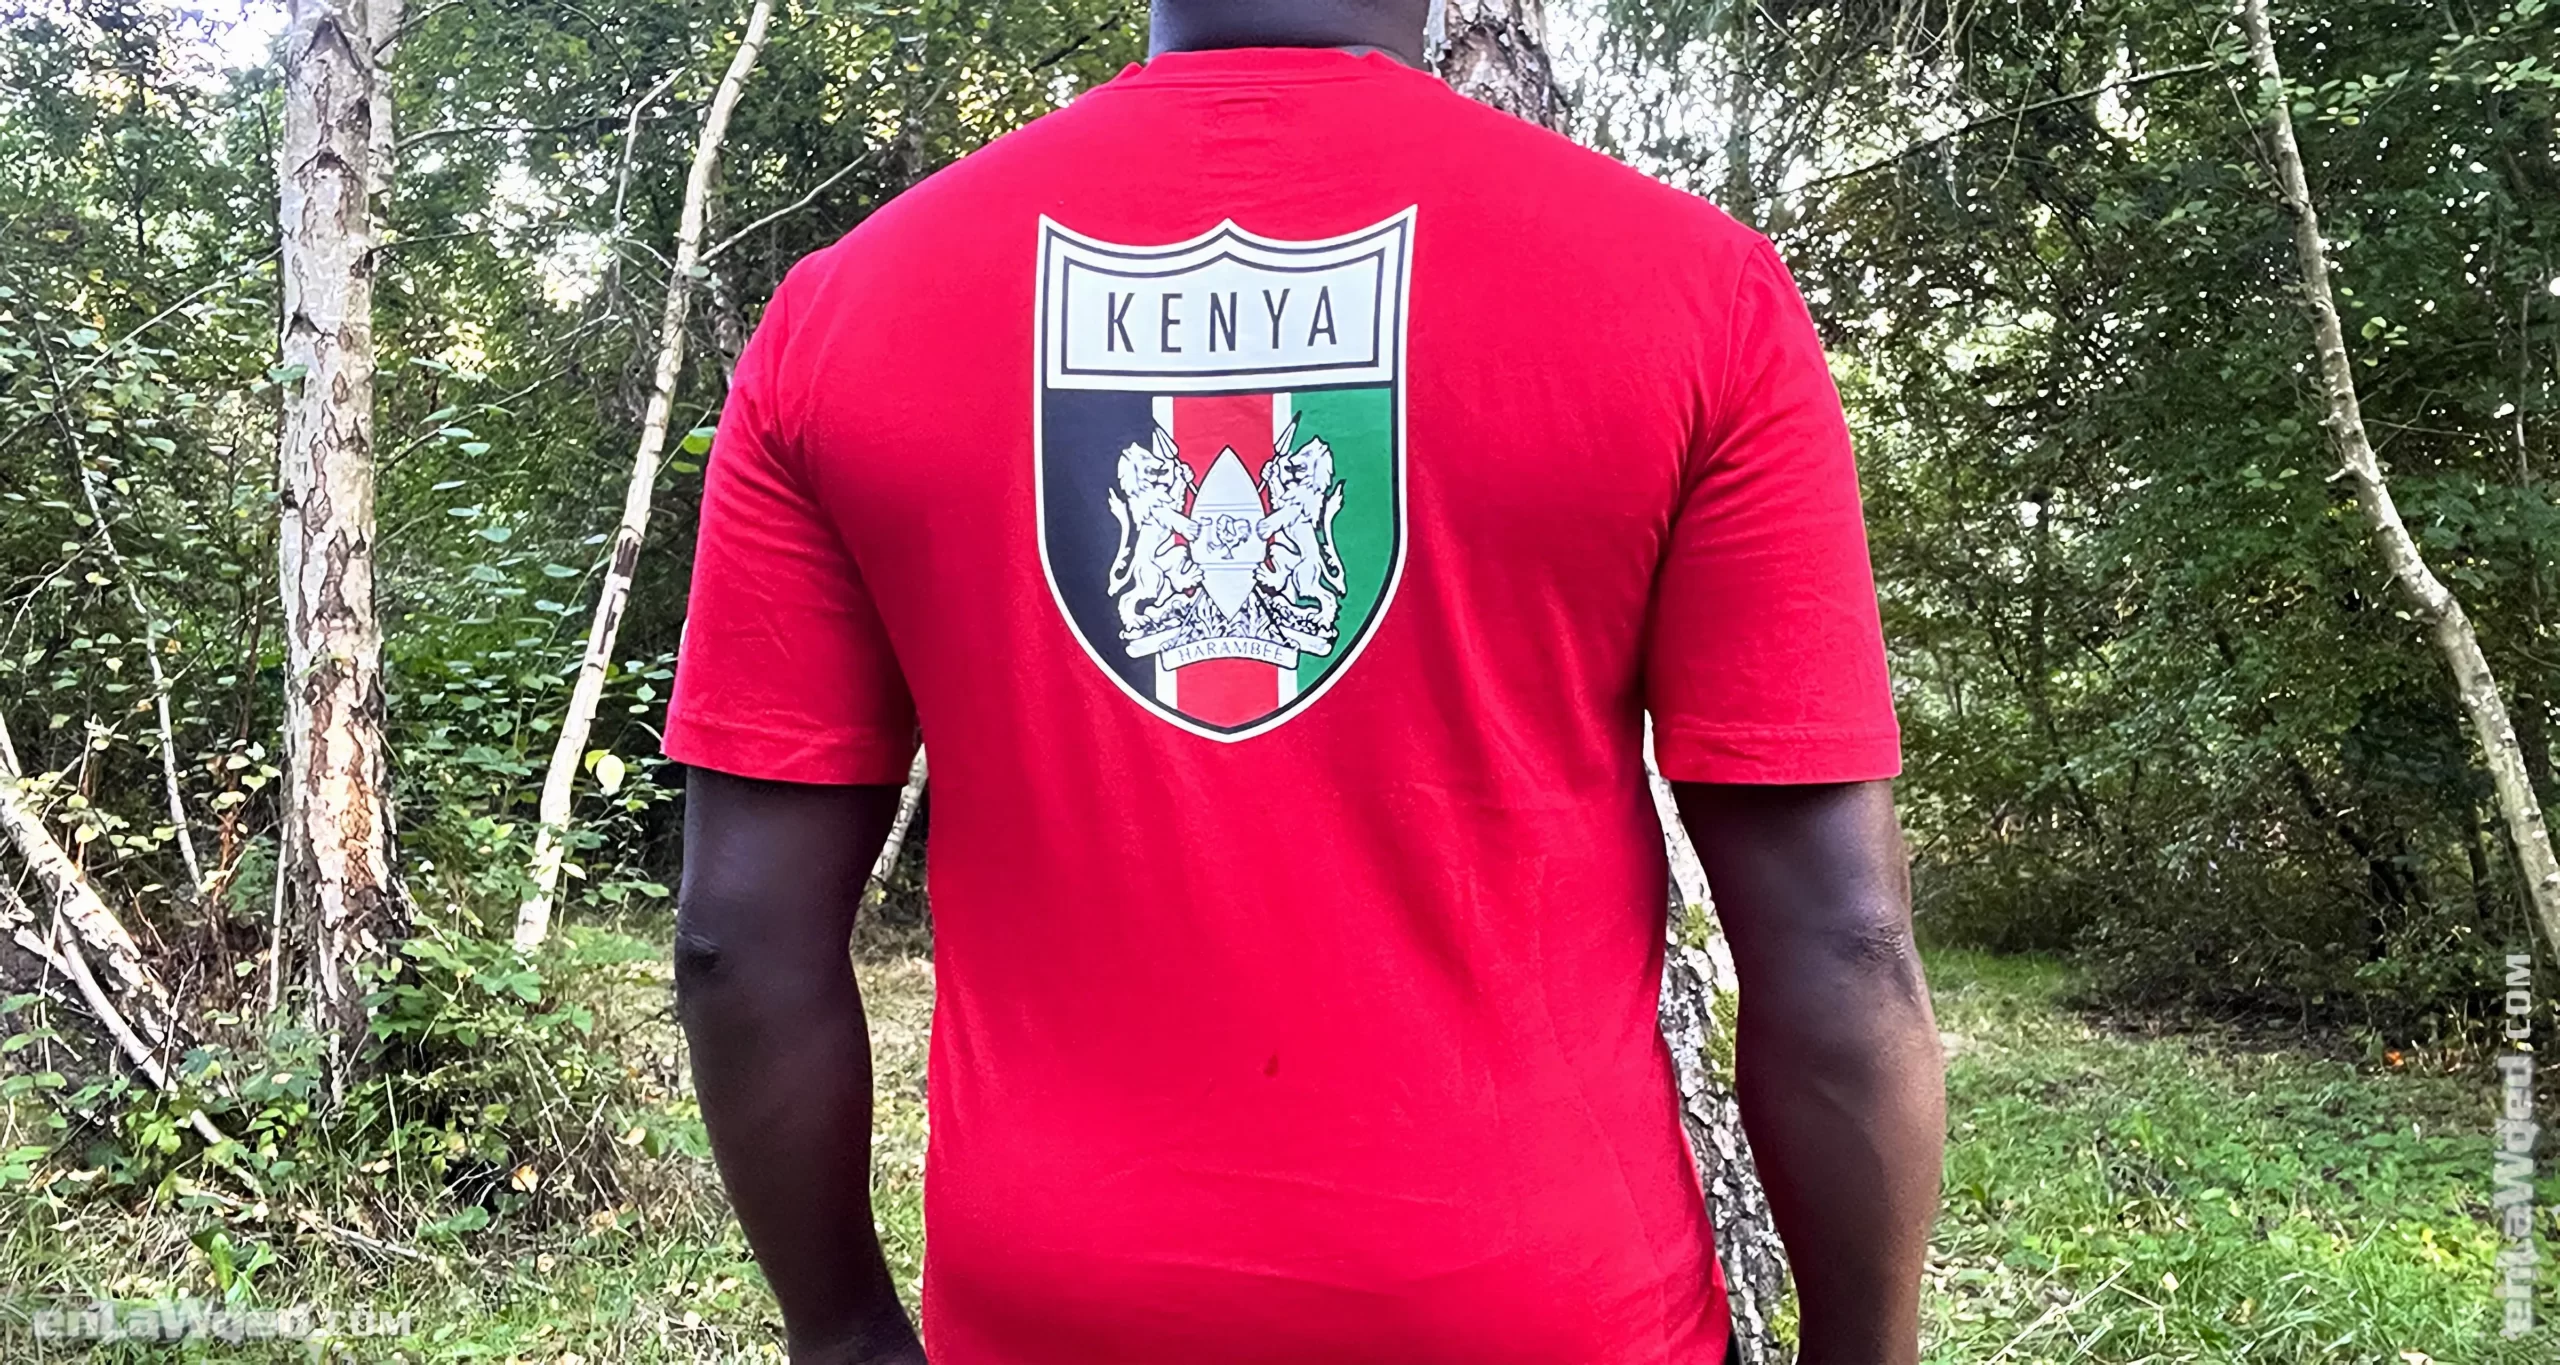 Men’s 2007 Kenya Harambee T-Shirt by Adidas Originals: Overnight (EnLawded.com file #lp1nbjaa126183kpk94sdqazn)